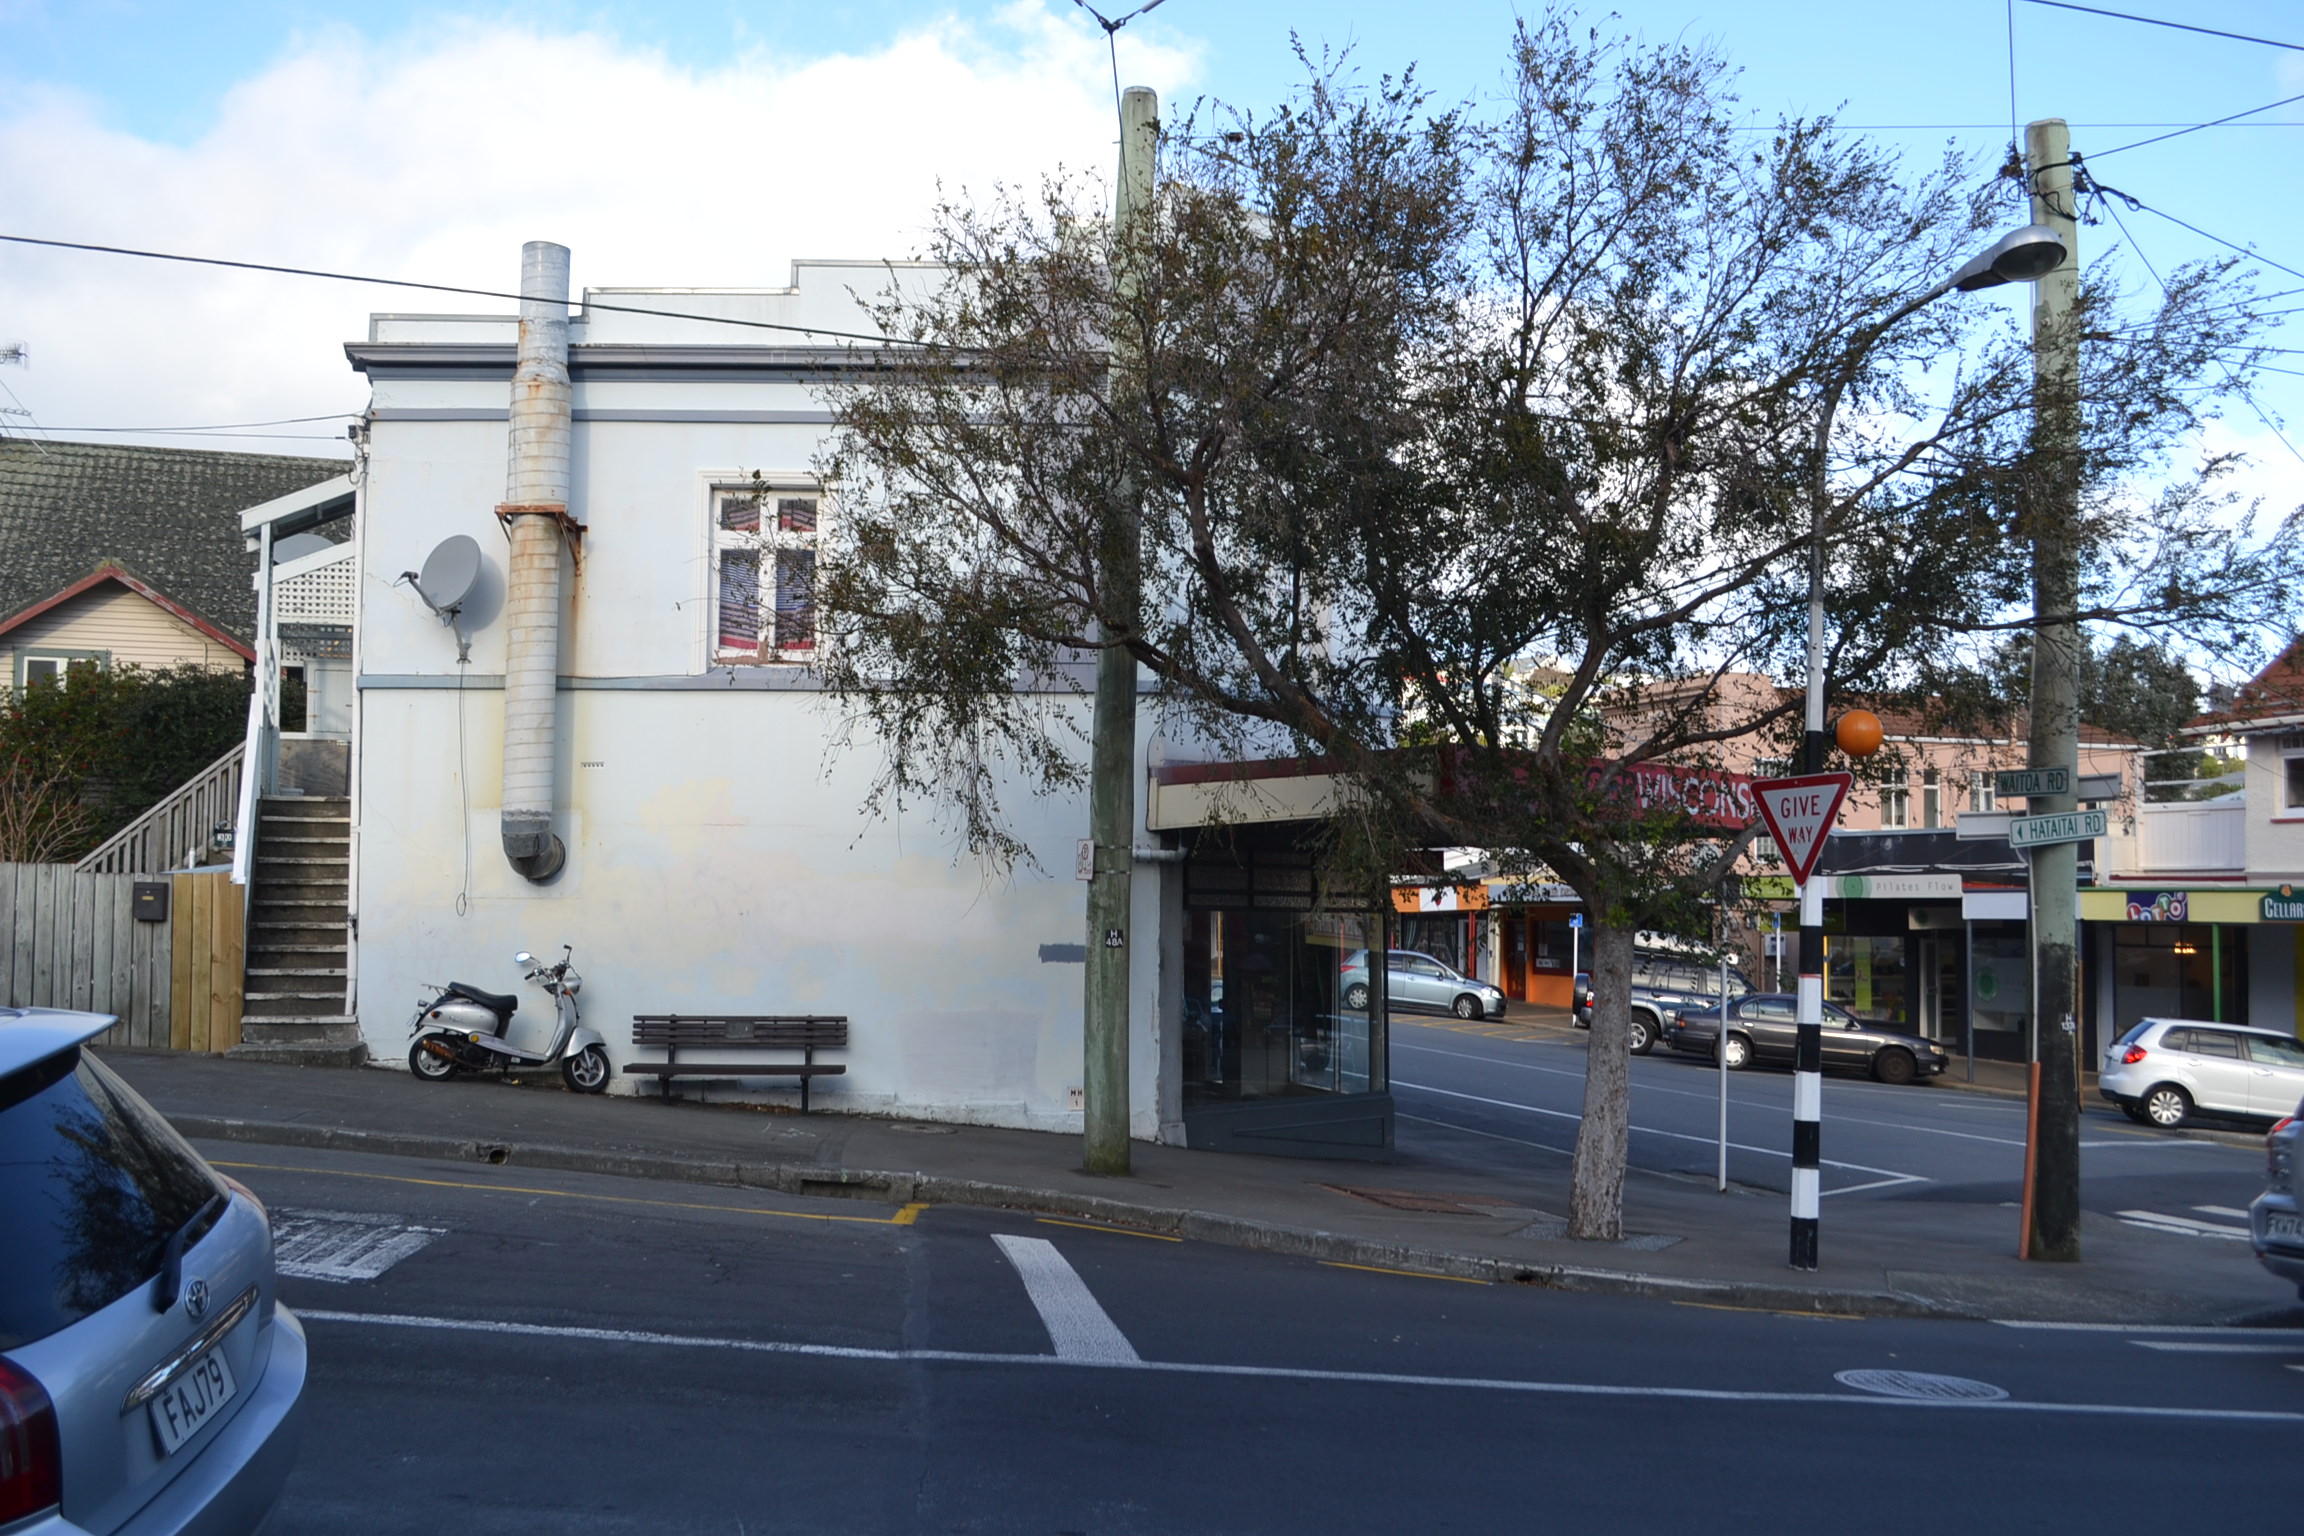 30 Waitoa Road. Image: WCC, 2015